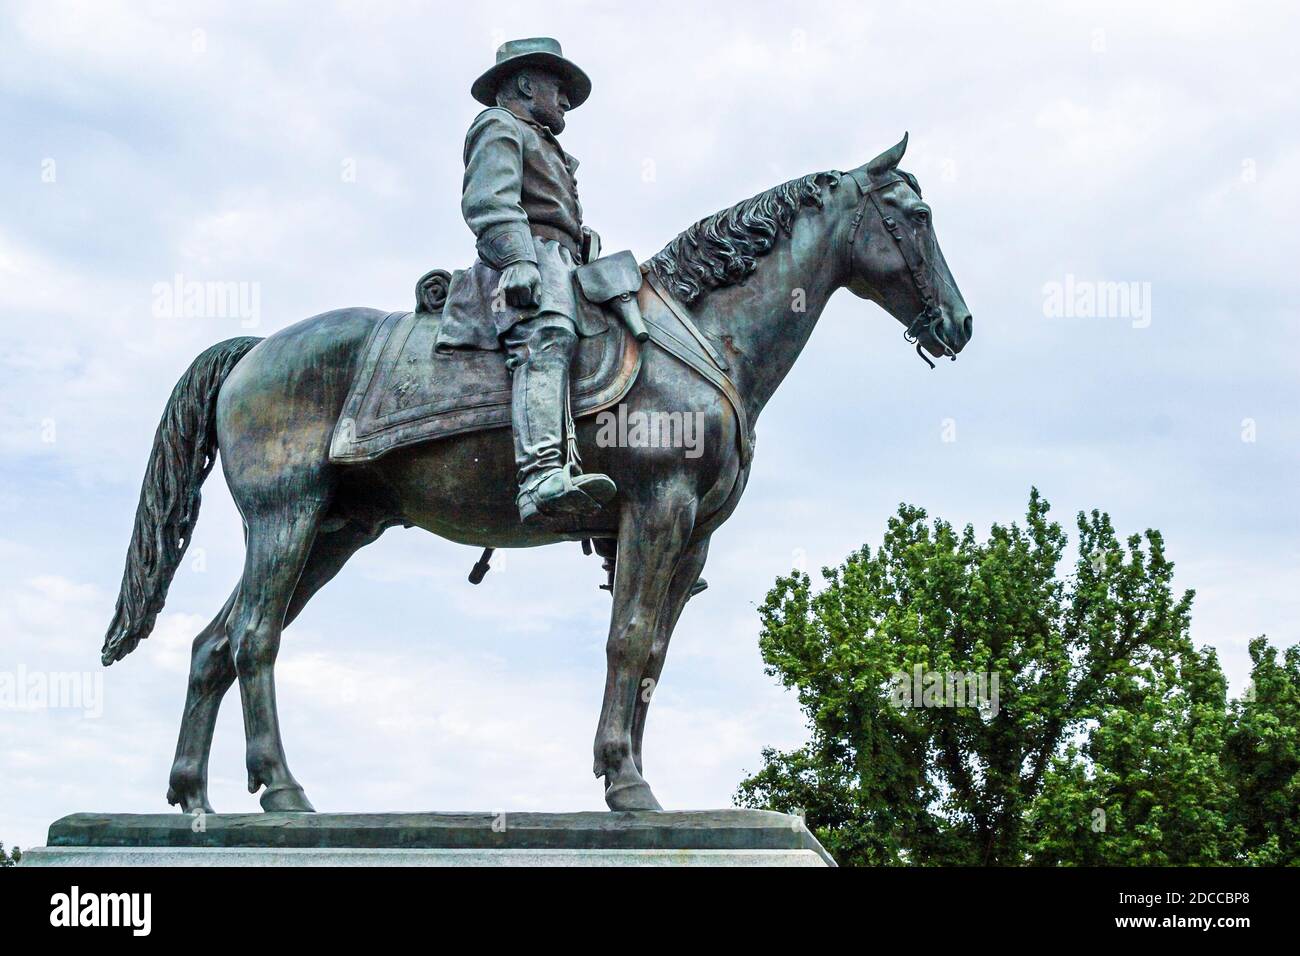 Mississippi Vicksburg National Military Park,Civil War battle site battlefield,Union Major General Ulysses S. Grant horse statue, Stock Photo